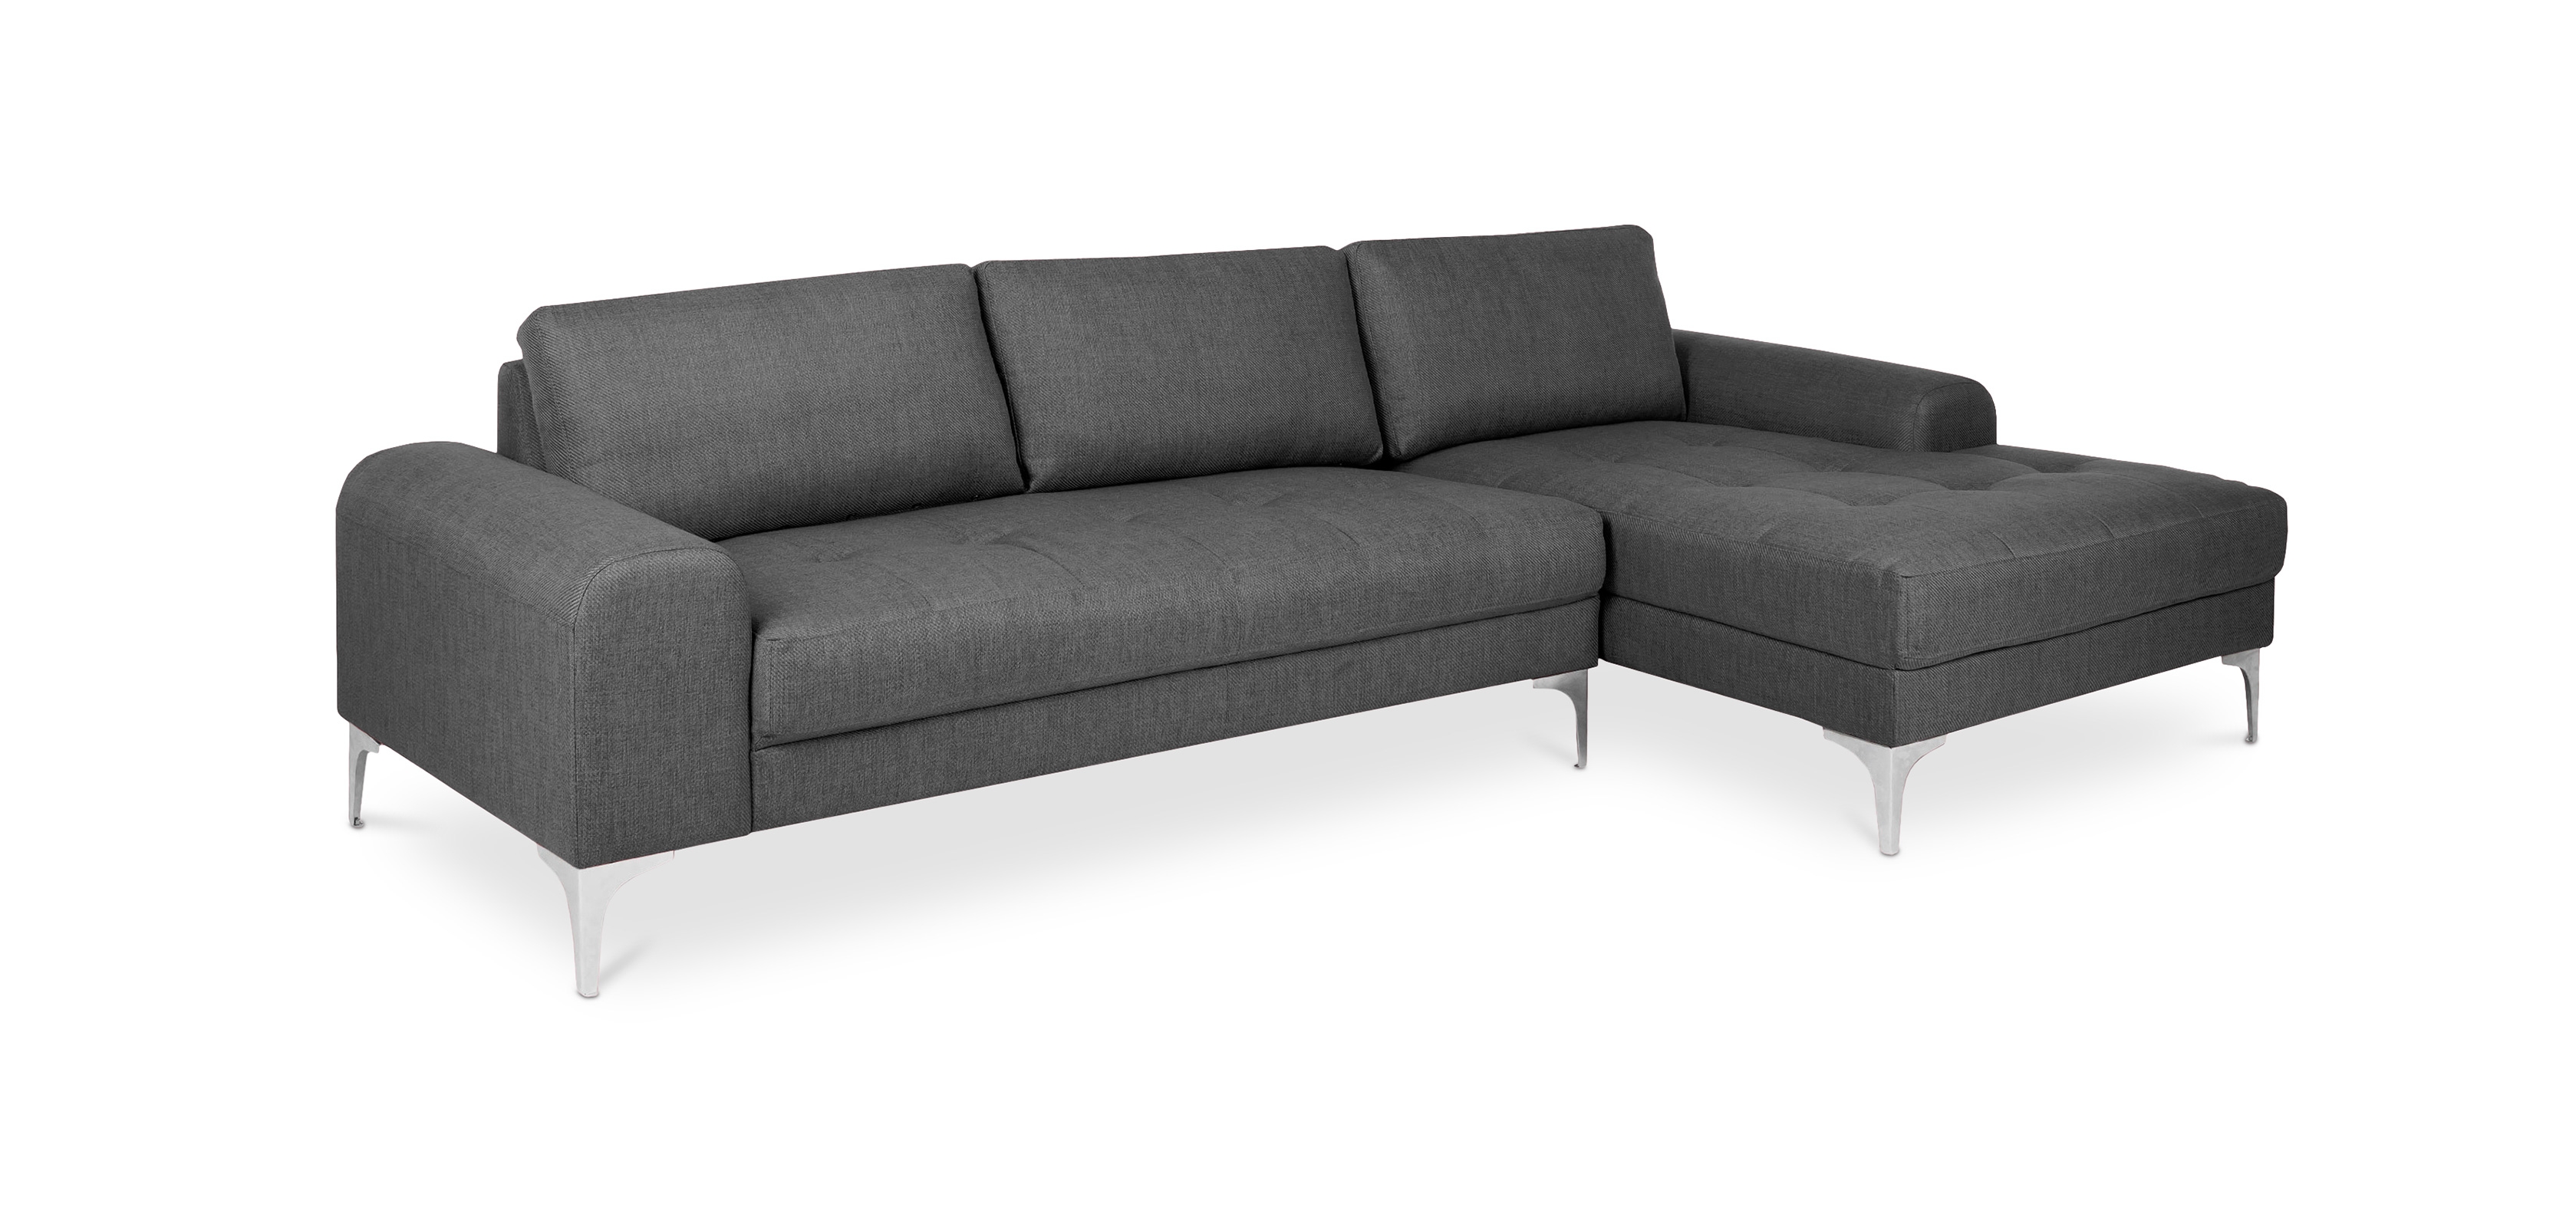 Buy Design Corner Sofa (5 seats) - Left Angle - Fabric Dark grey 26730 - in the EU